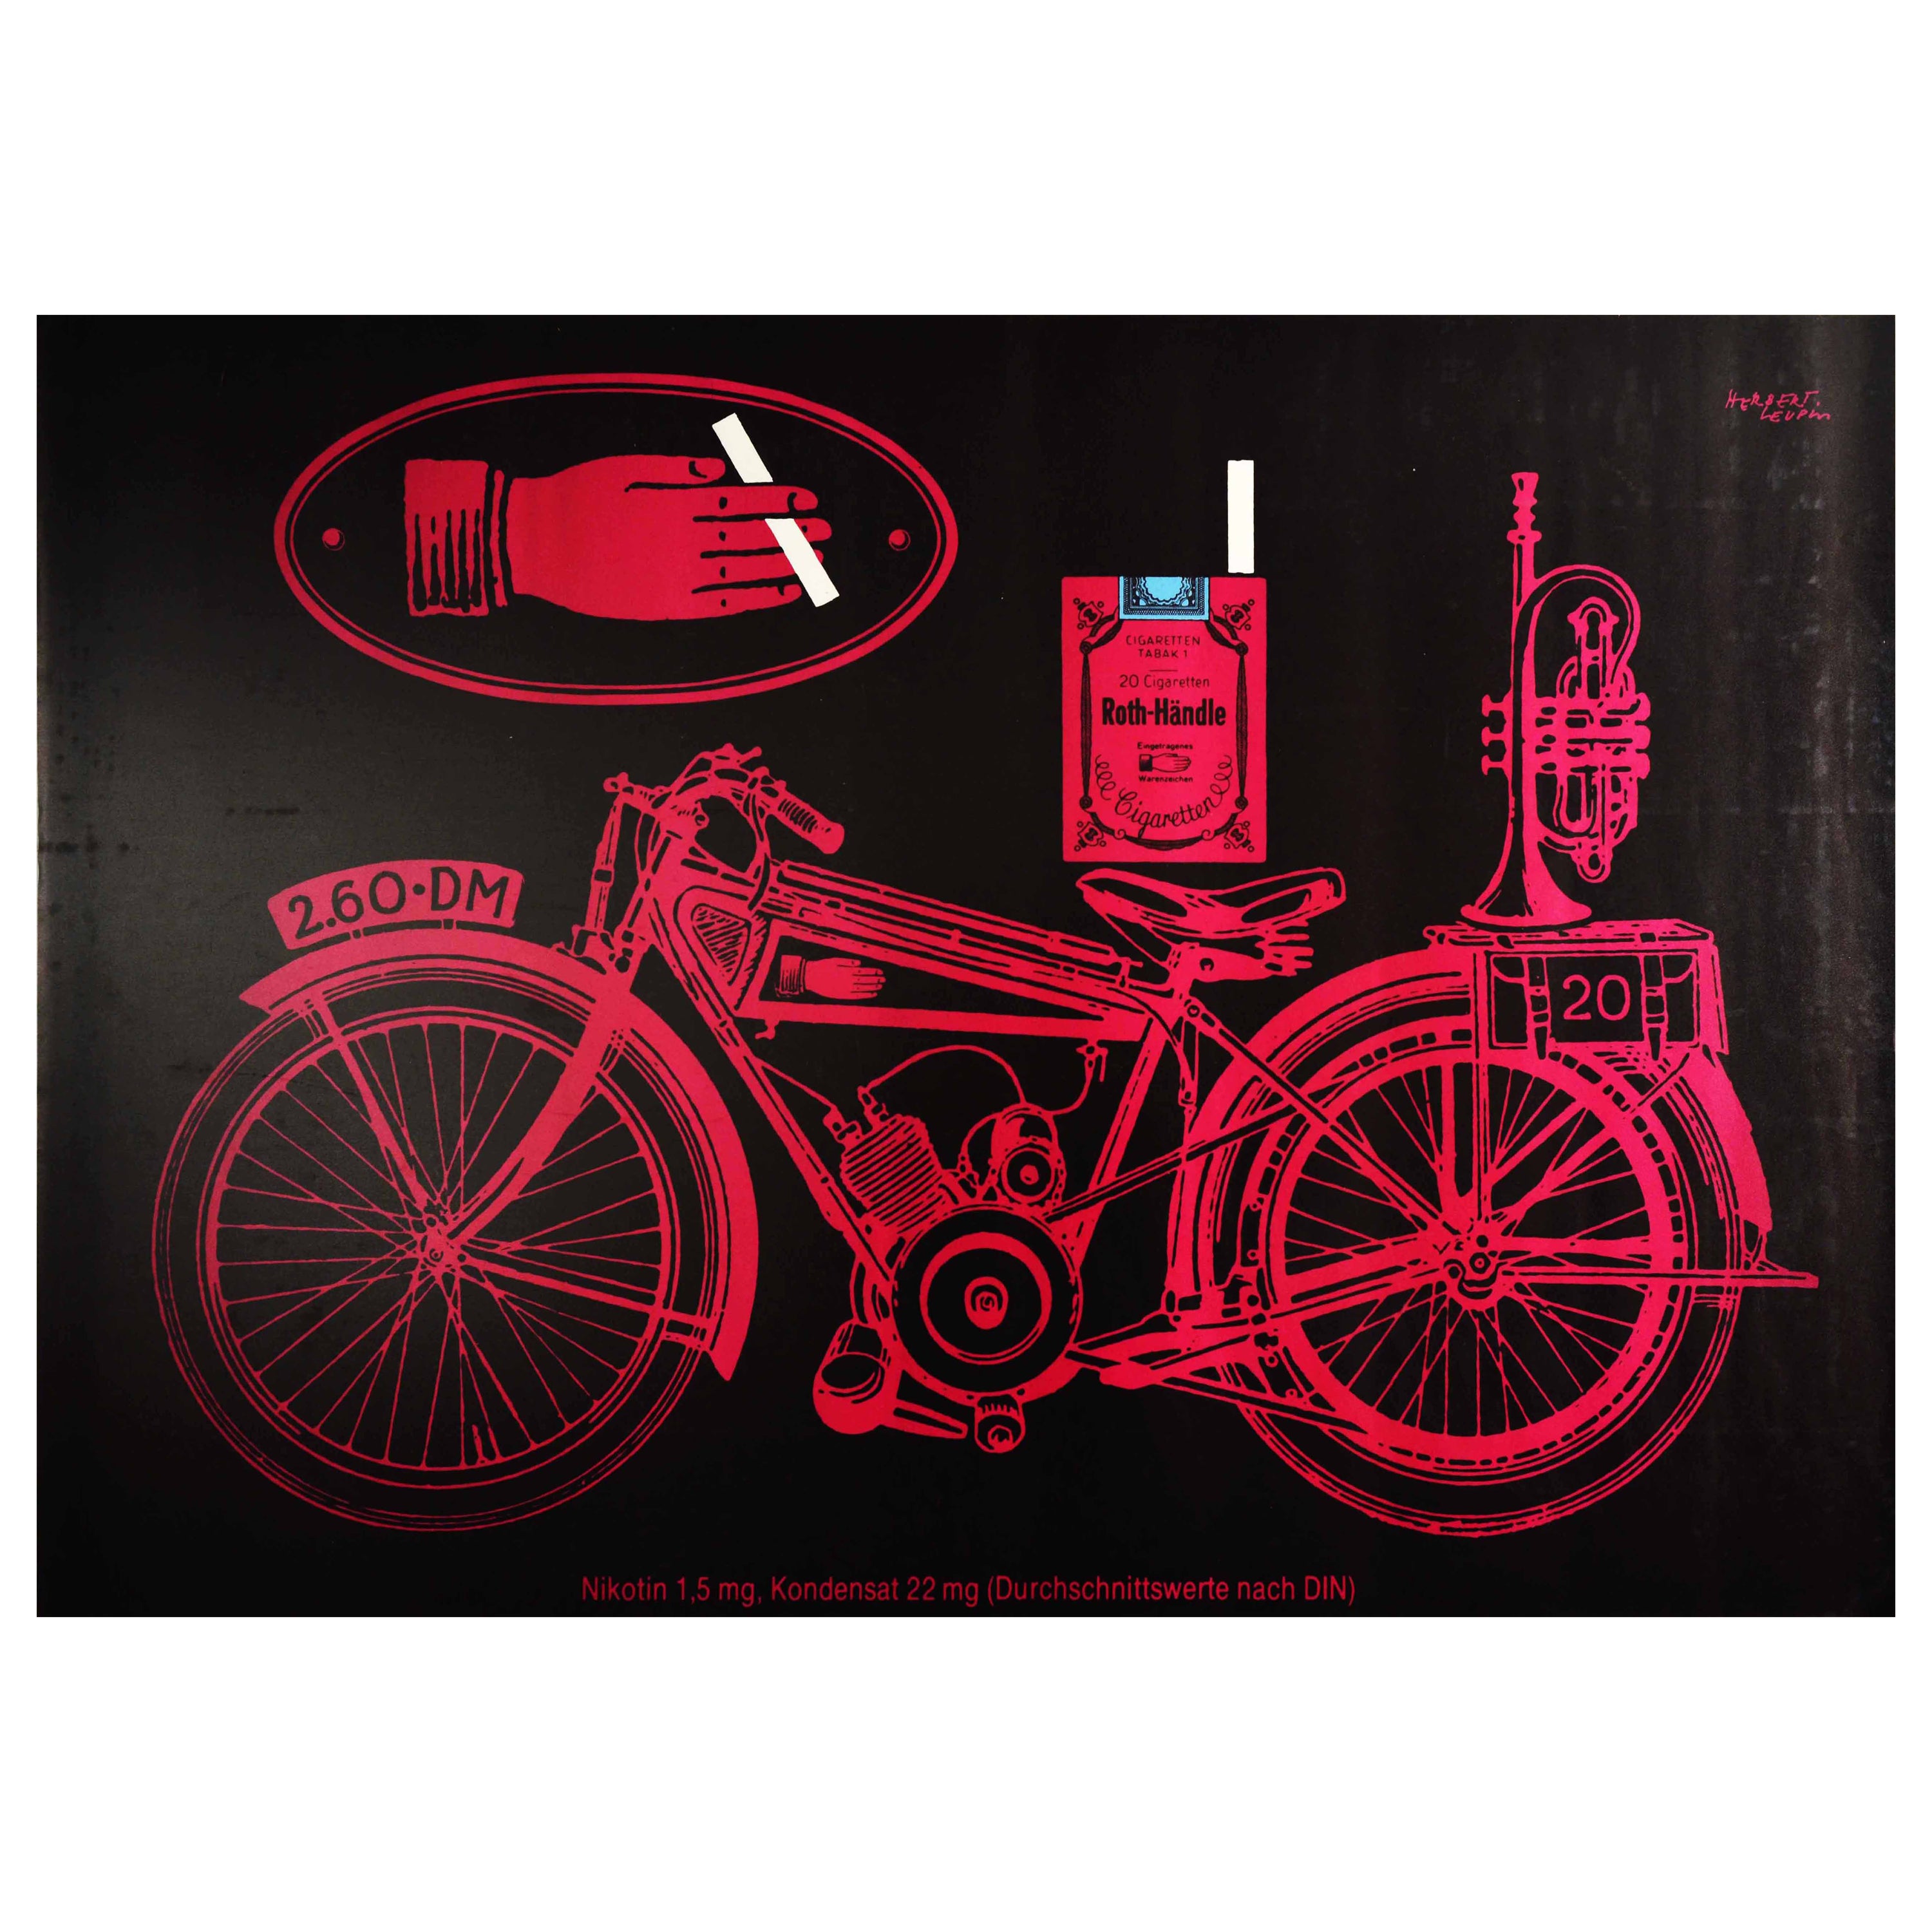 Original Vintage Poster Roth Handle Cigarettes Tobacco Smoking Motorcycle Design